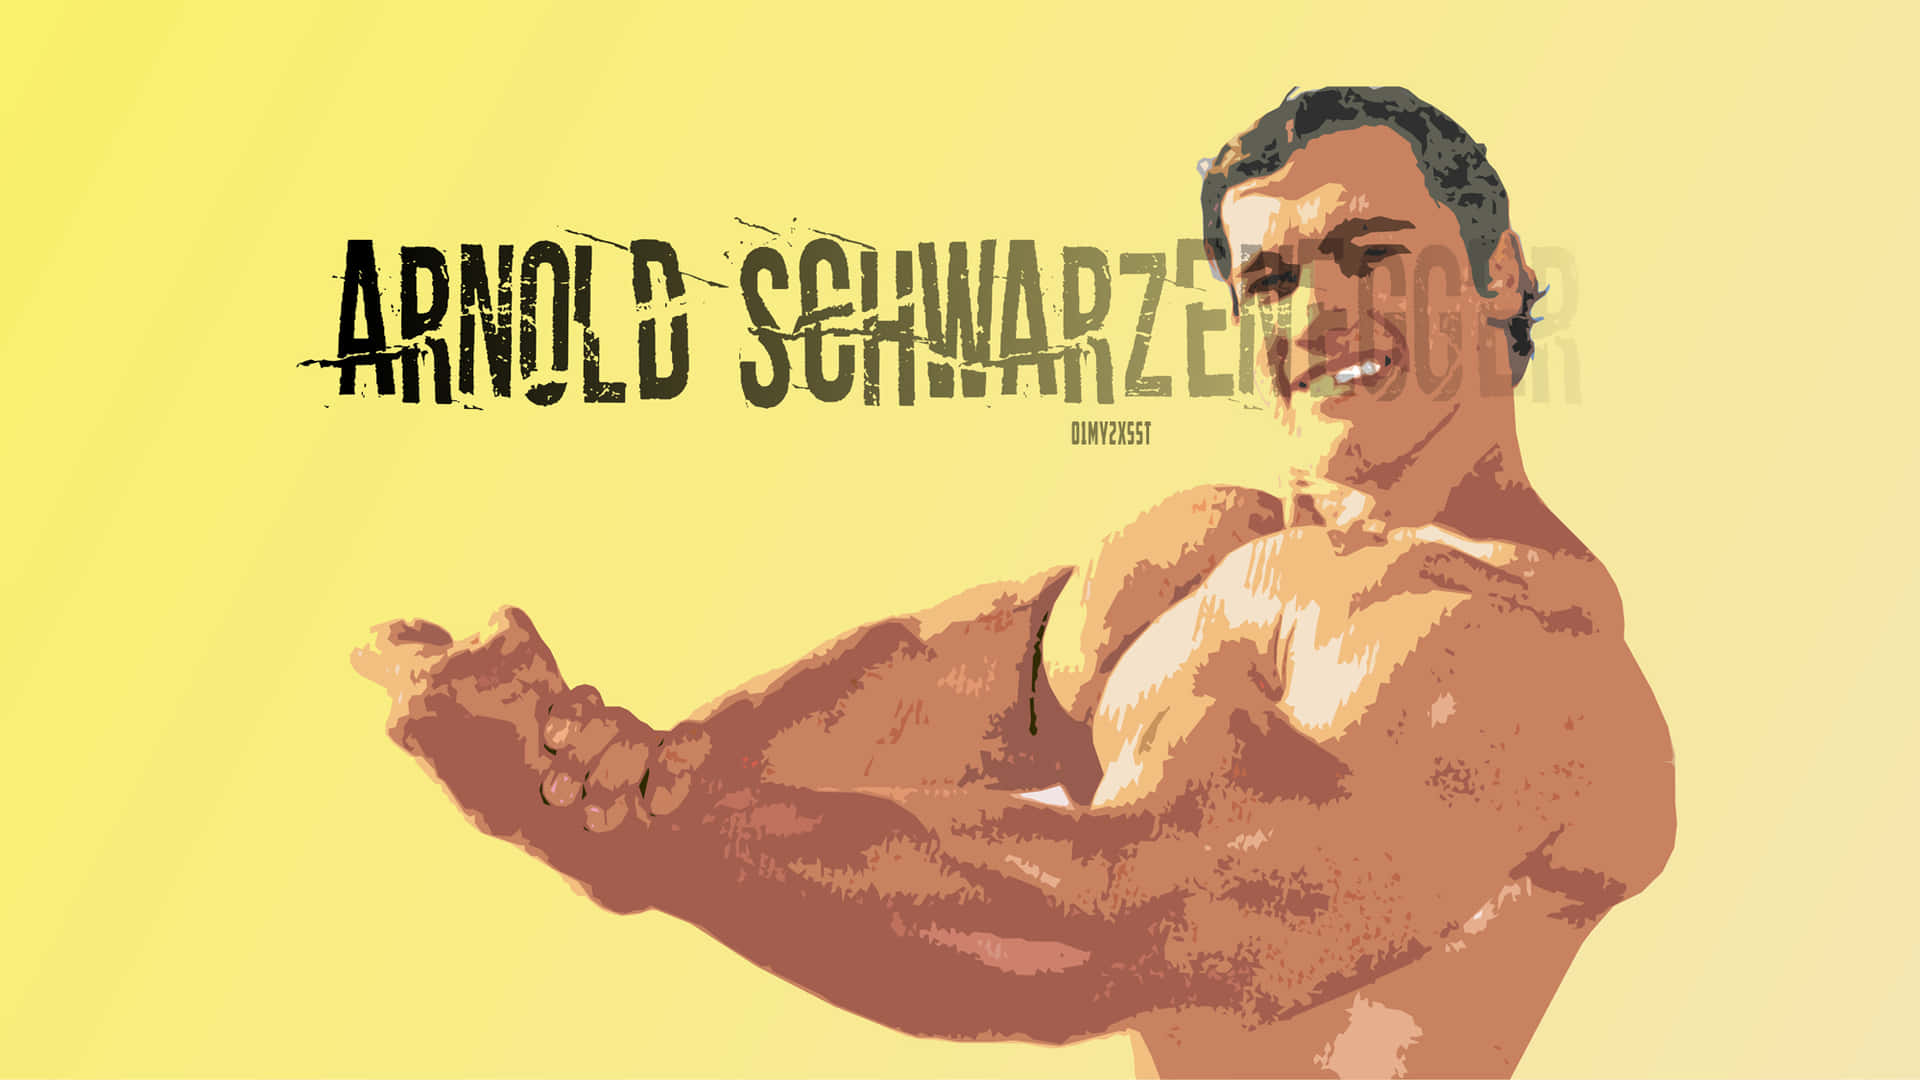 Hintergrundbildvon Arnold Schwarzenegger